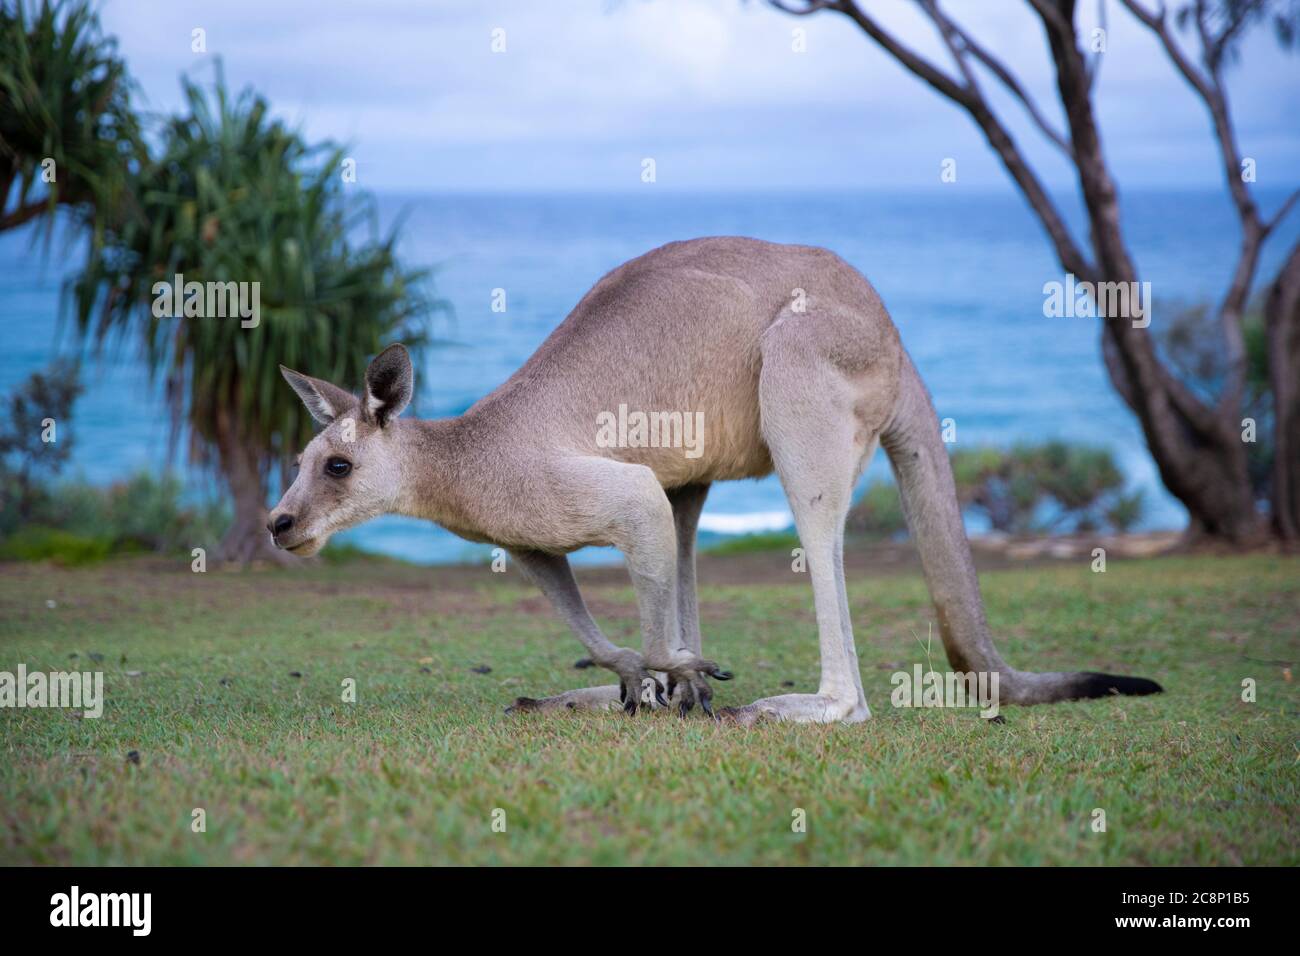 Portrait of a kangaroo, Queensland Australia Stock Photo